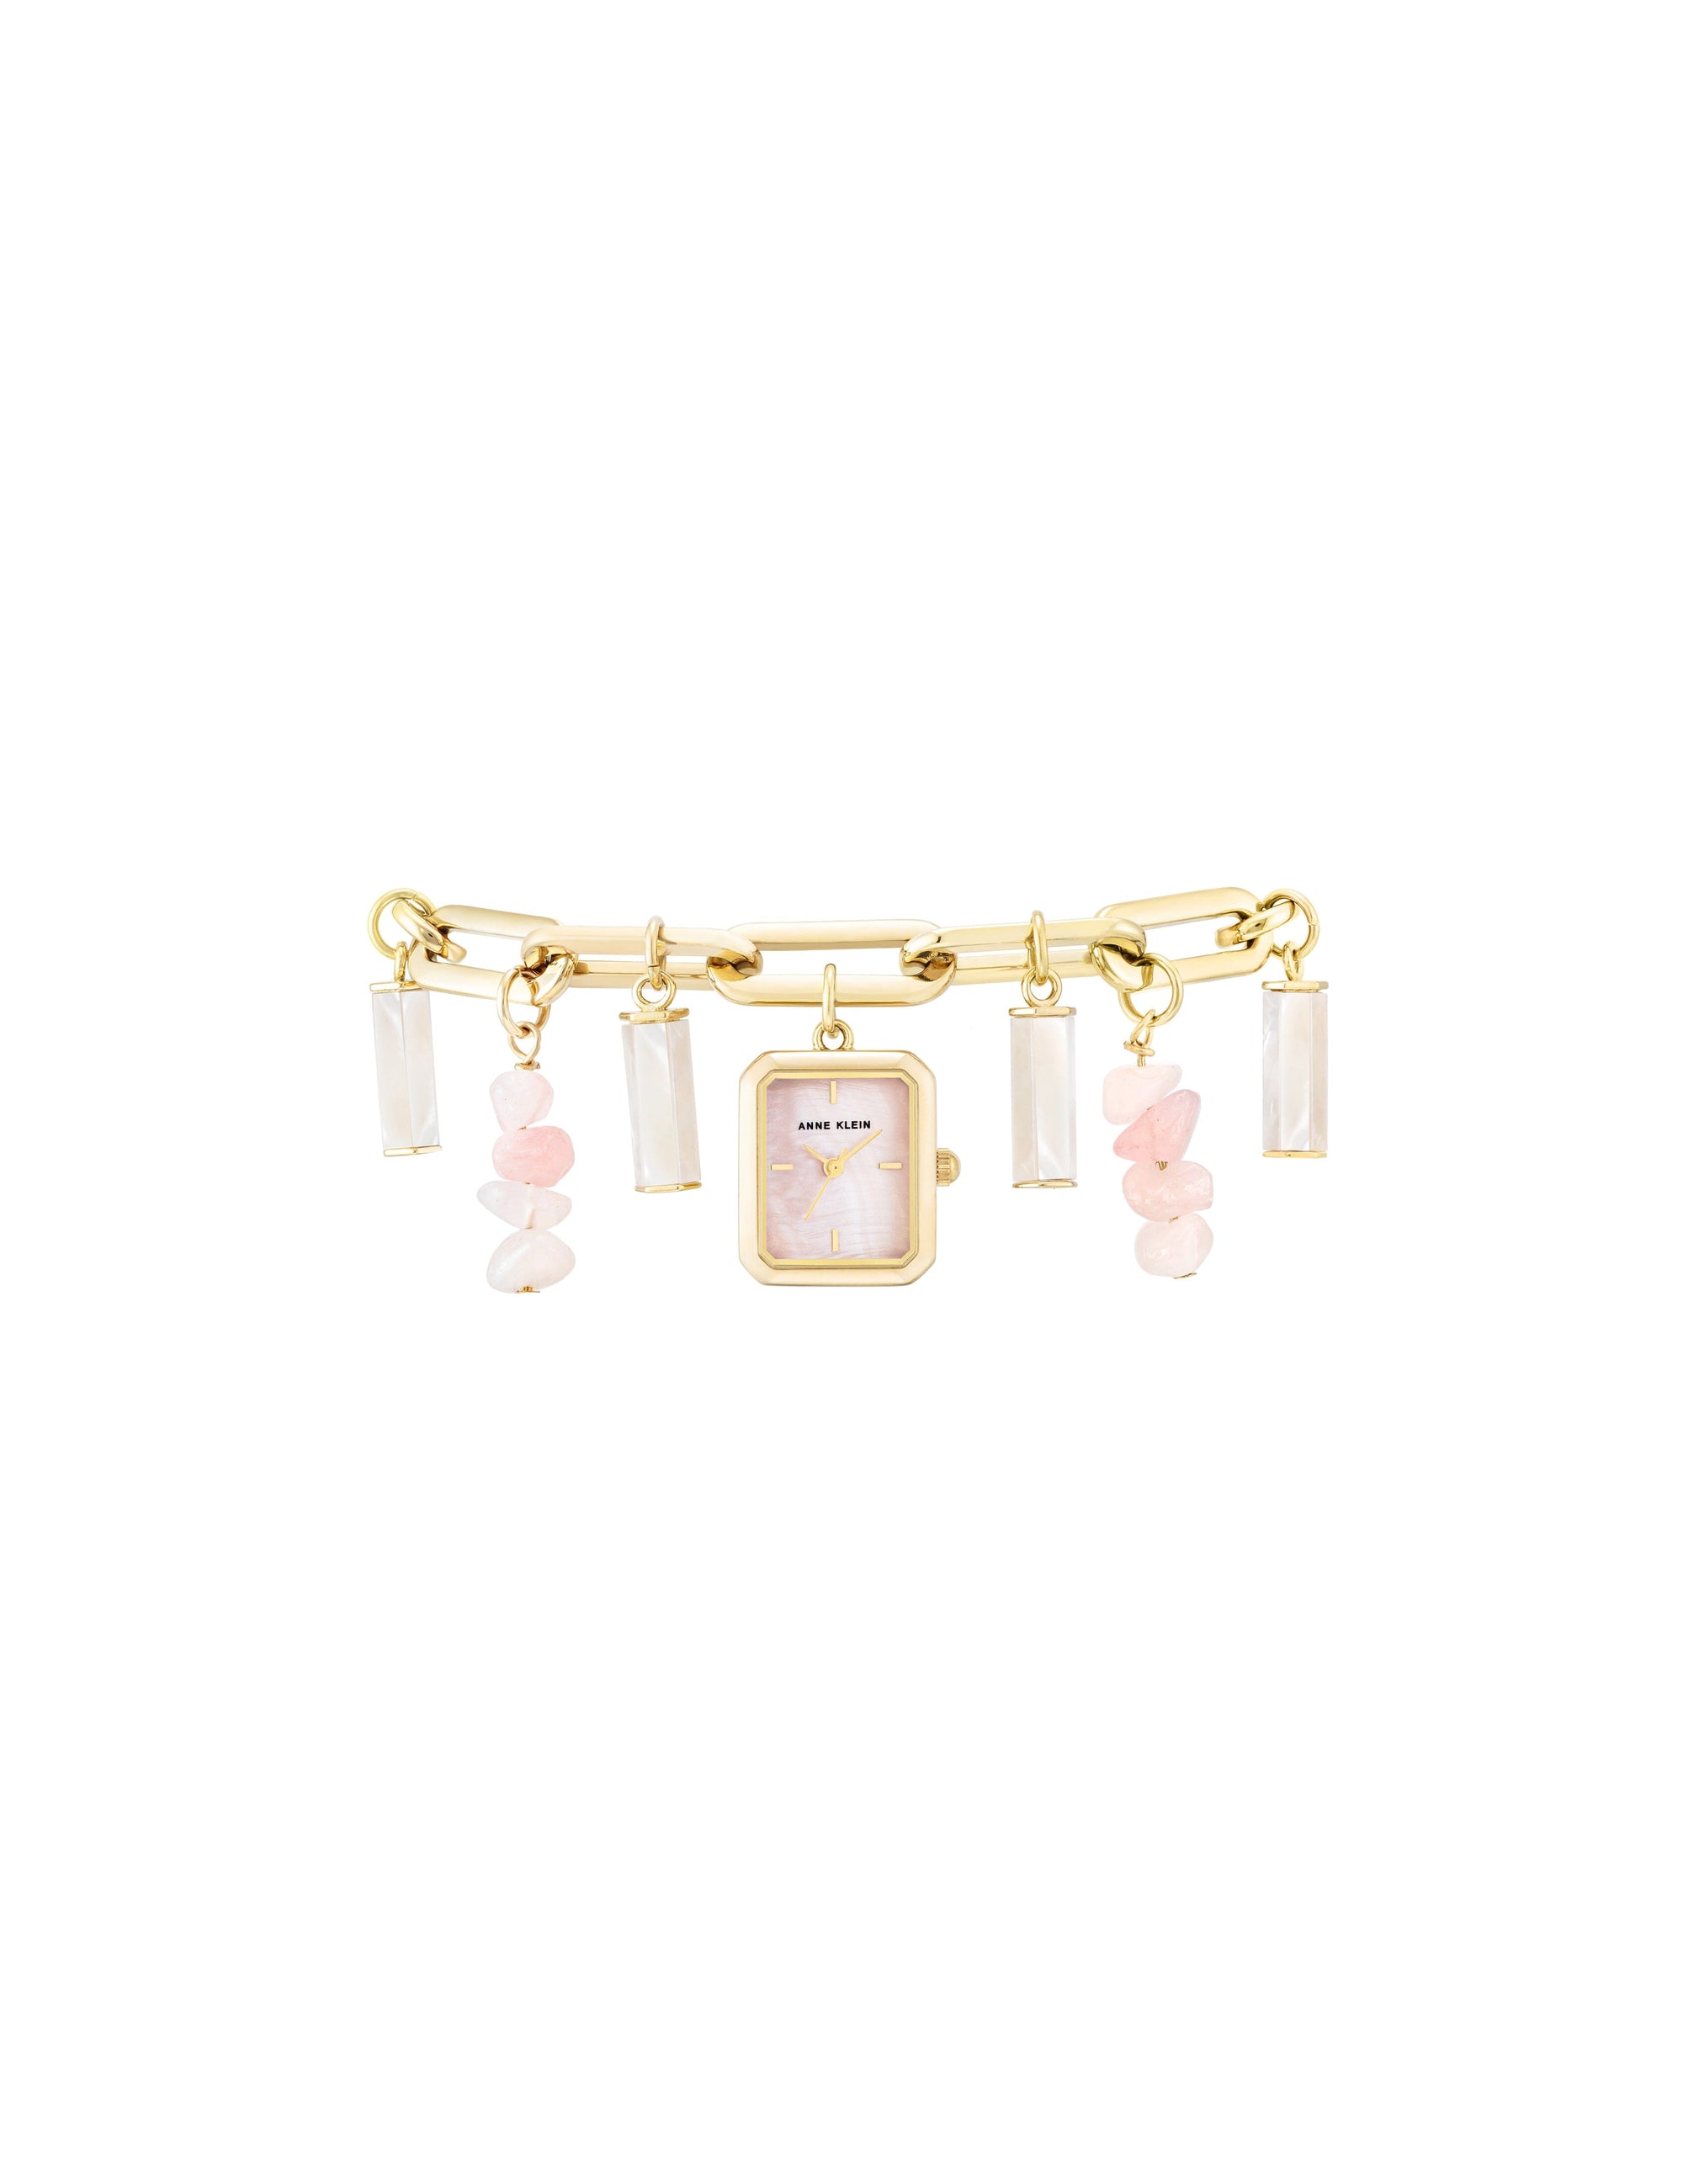 Elite Ladies Gold Tone Heart Charm Bracelet Watch - Angus & Coote Catalogue  - Salefinder